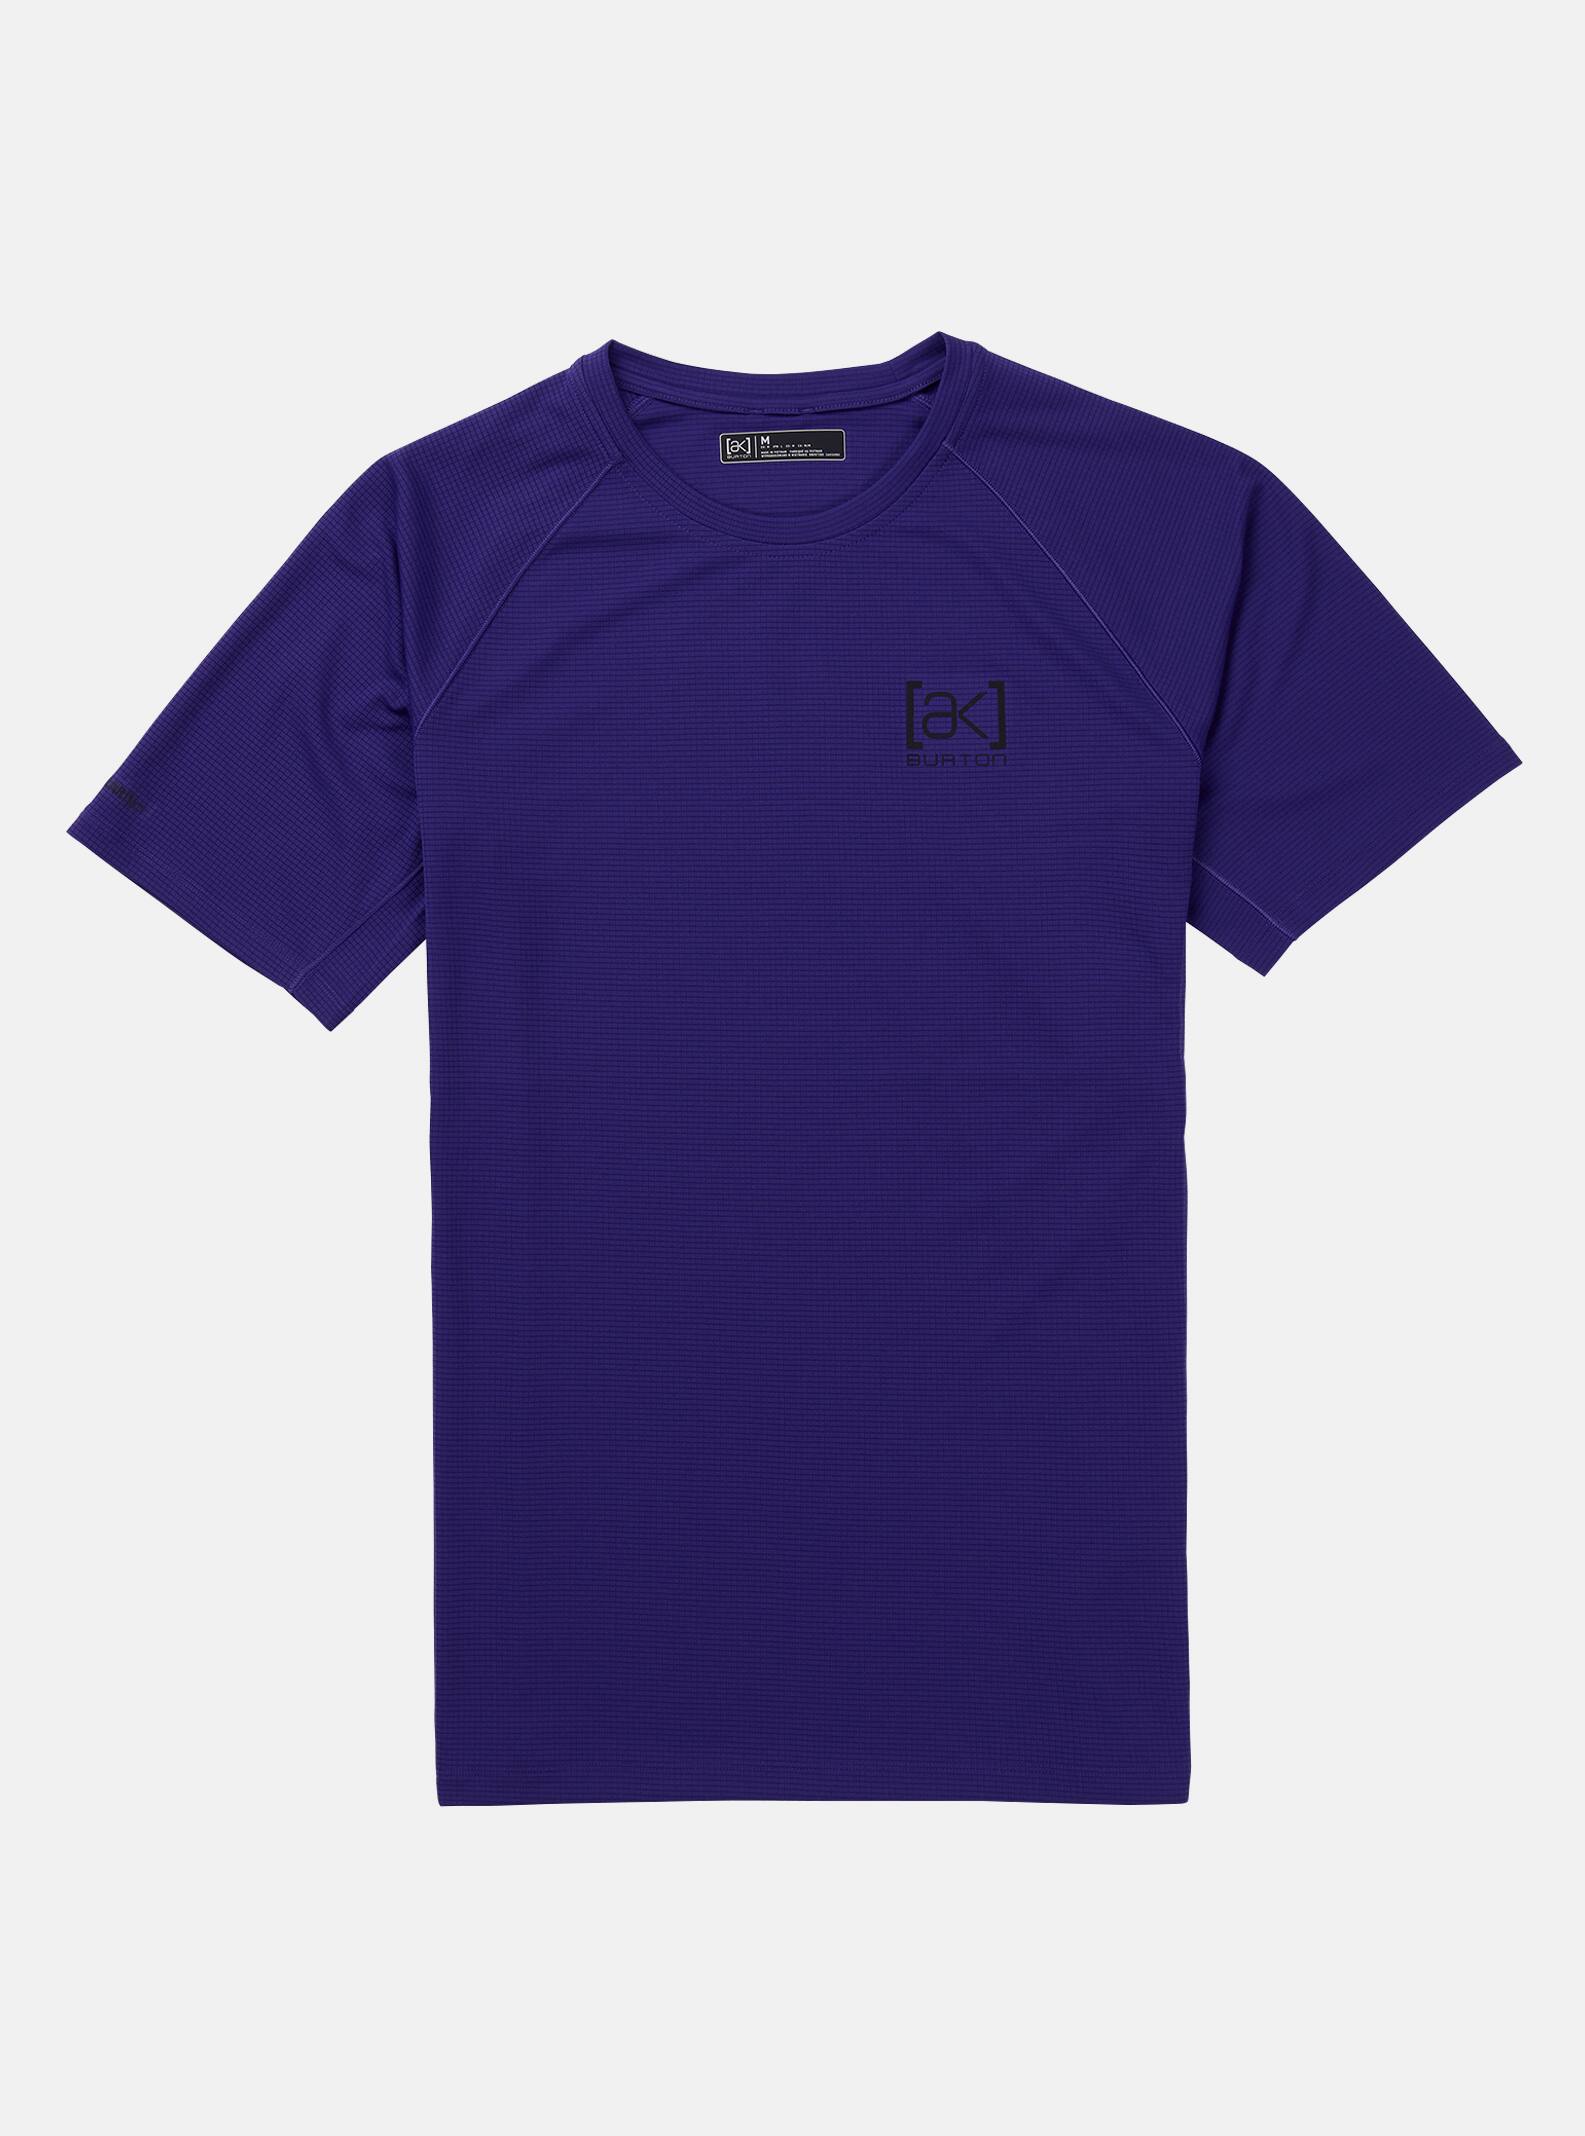 Burton [ak] Helium Power Dry kortärmad t-shirt för herrar, Prism Violet, S